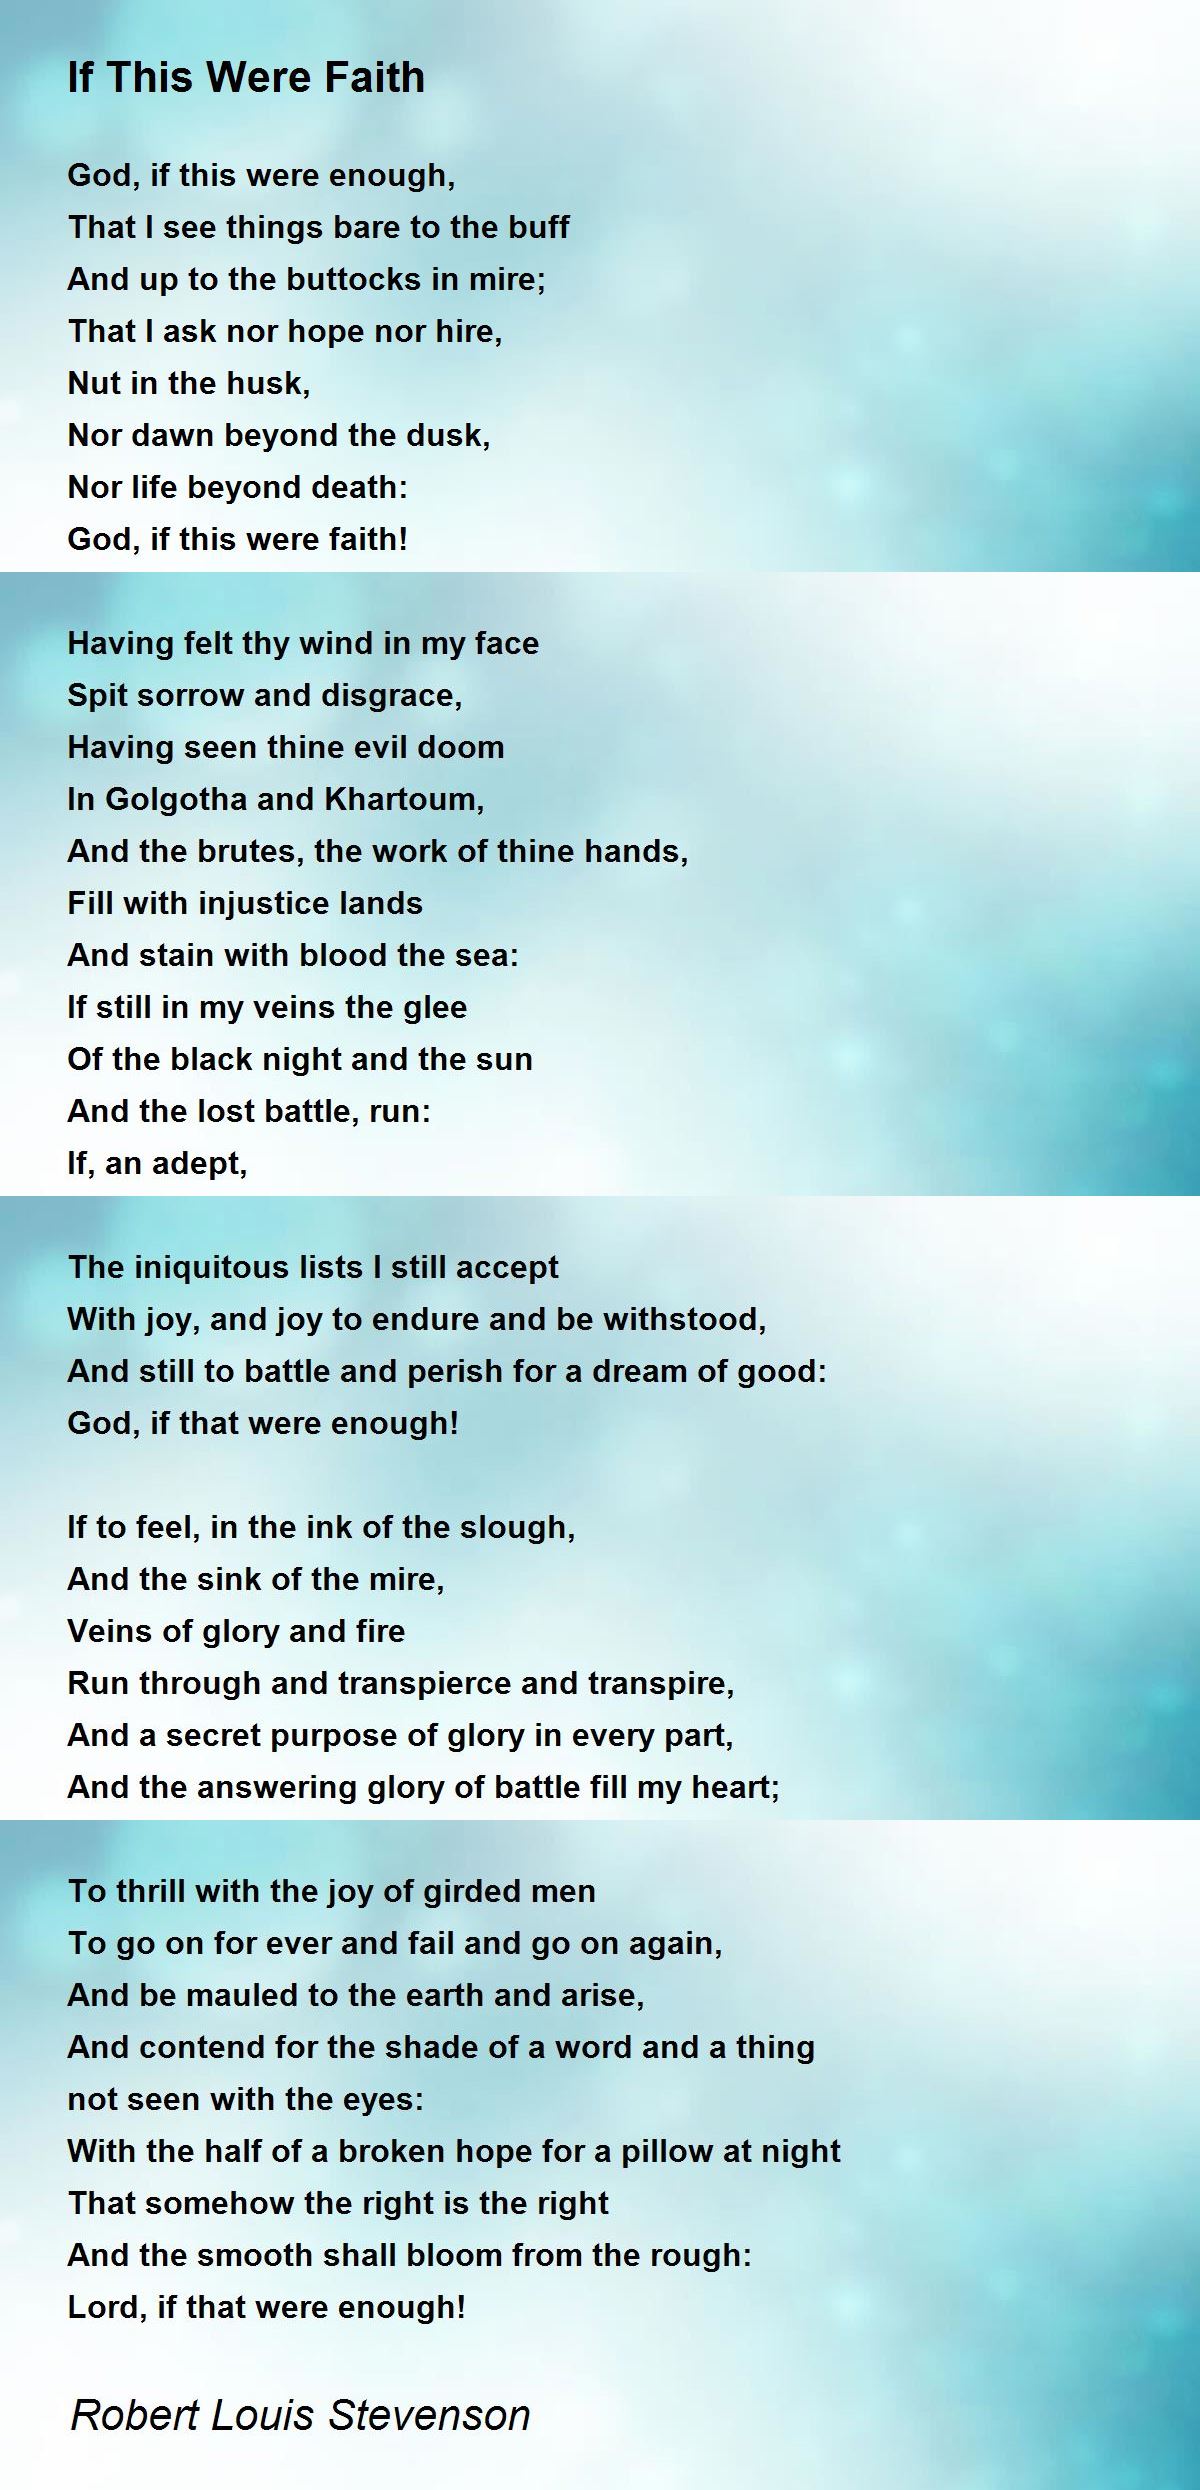 If This Were Faith Poem by Robert Louis Stevenson - Poem Hunter